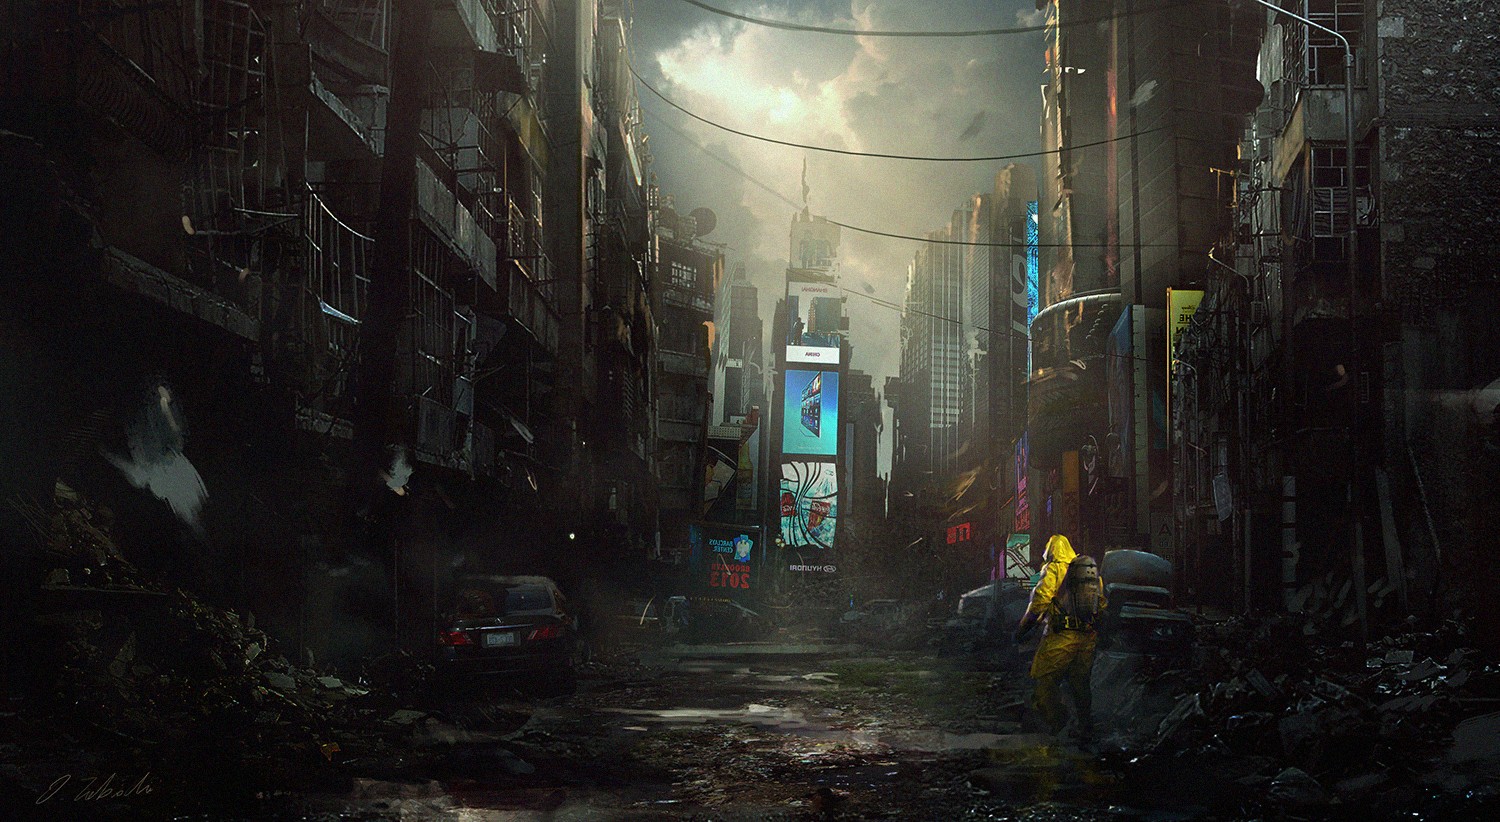 Fantasy Art Apocalyptic Hazmat Suits Billboards Destruction Power Lines Abandoned Futuristic Darek Z 1500x822